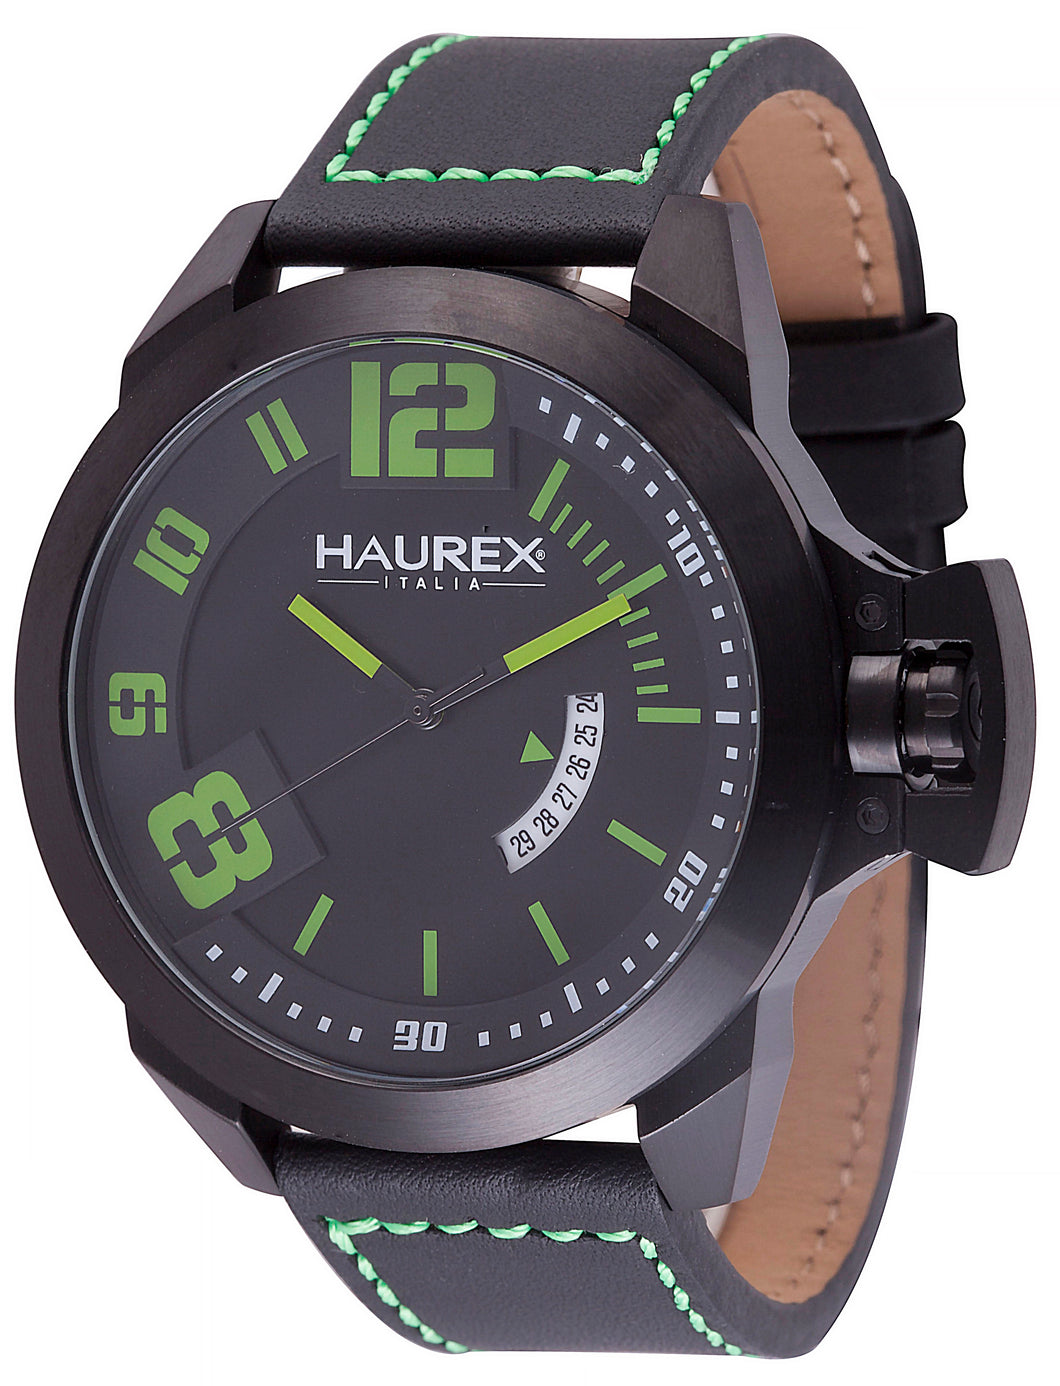 Haurex Italy Storm Men's Black/Green Dial Black Strap Watch